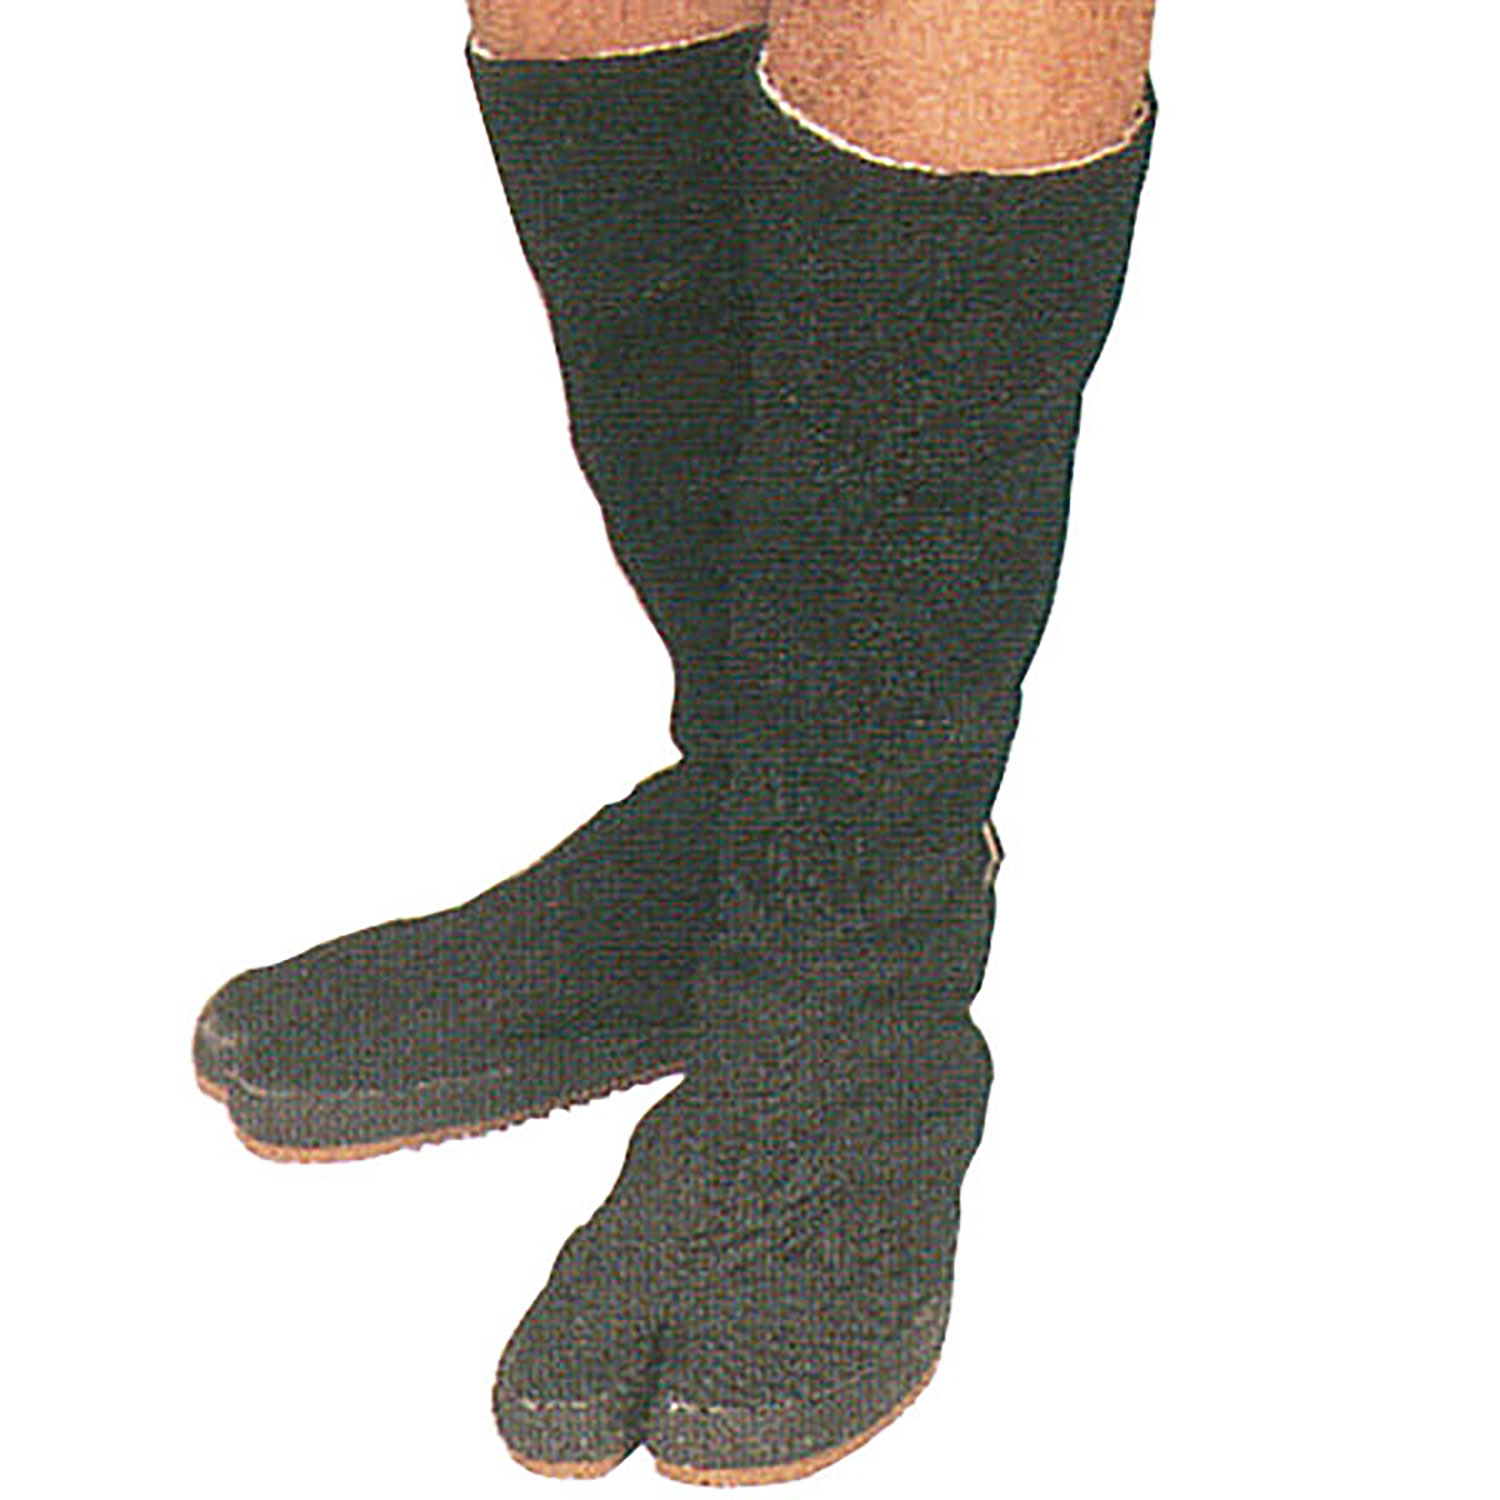 Socks Martial Arts Ninja Uniform Deluxe Set Chucks Tabi Boots 